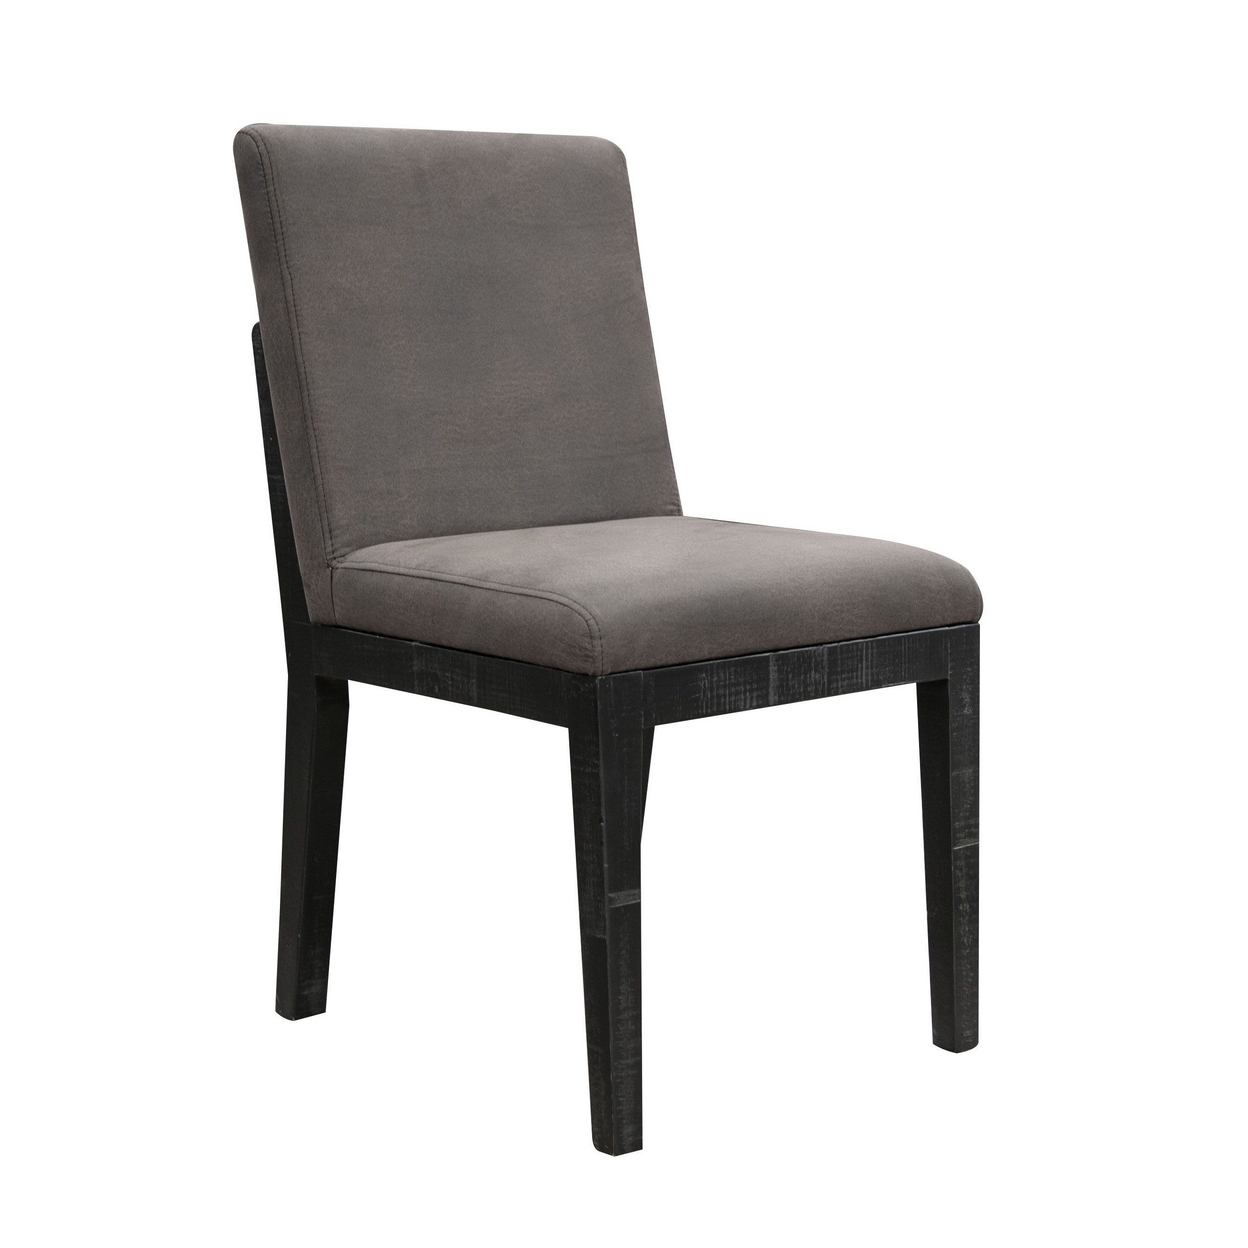 Piel 23 Inch Dining Chair Set Of 2, Black Pine Wood, Gray Faux Leather - Saltoro Sherpi